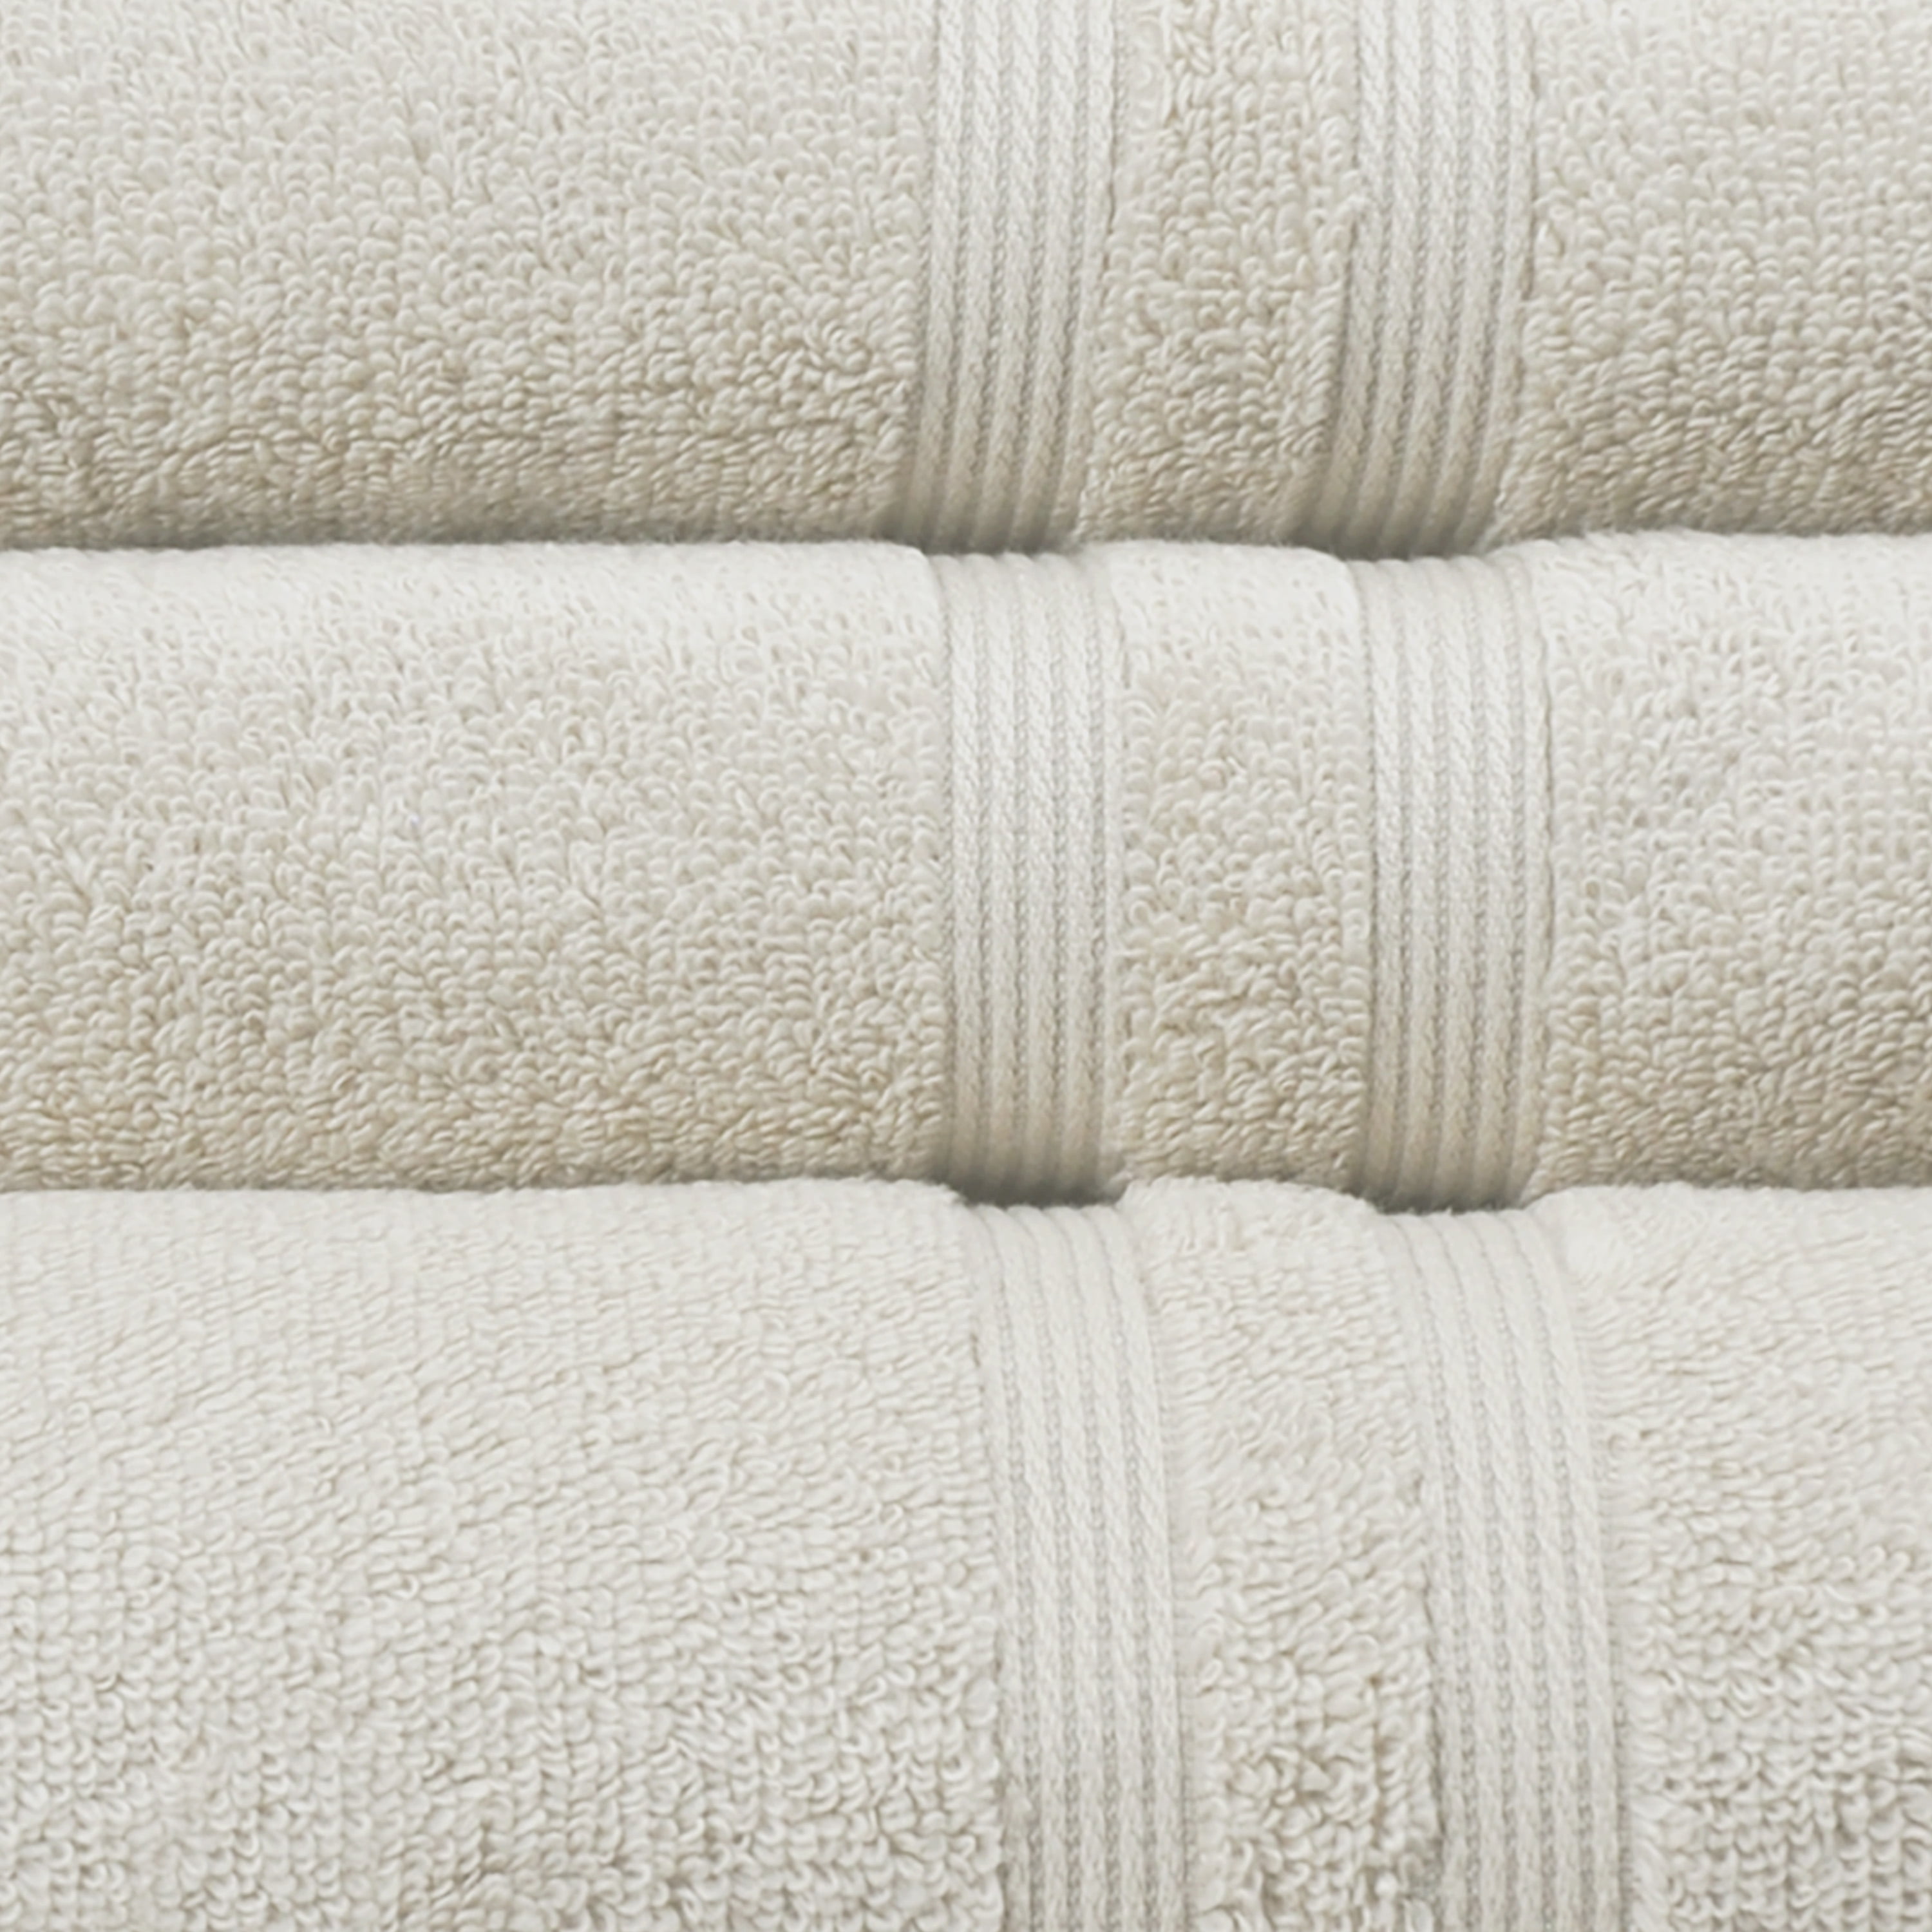 Mainstays 6-Piece Towel Collection, 2 2 Whisper Hand, Textured 2 Wash Set Performance Bath, Iris